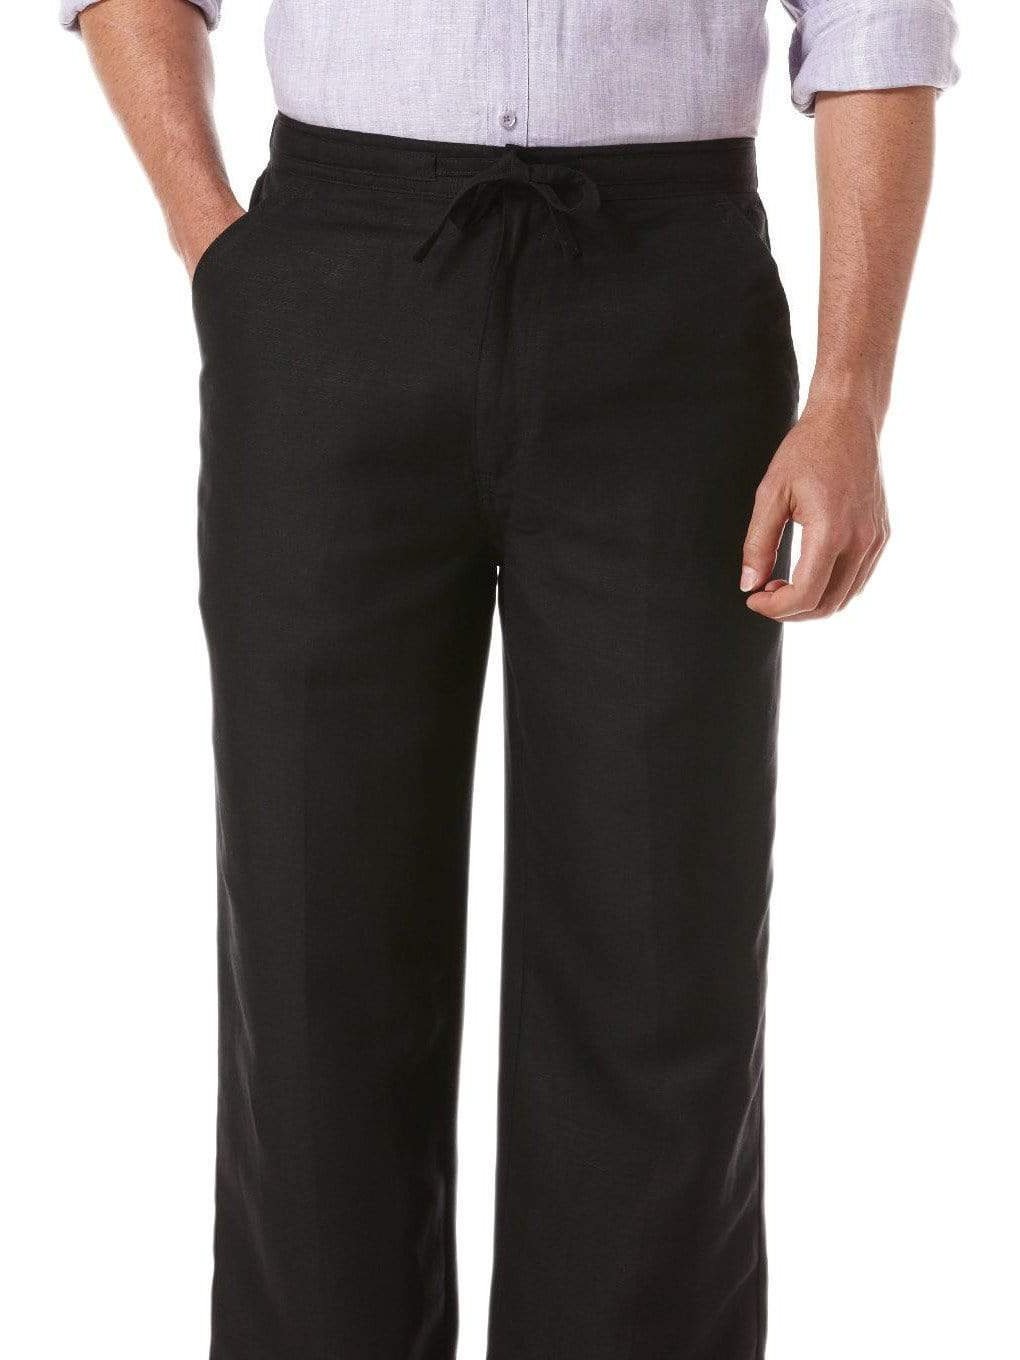 Cubavera PANTS 46X32 Cubavera Classic Fit Solid Black Washable Casual Pants With Drawstring Waistband